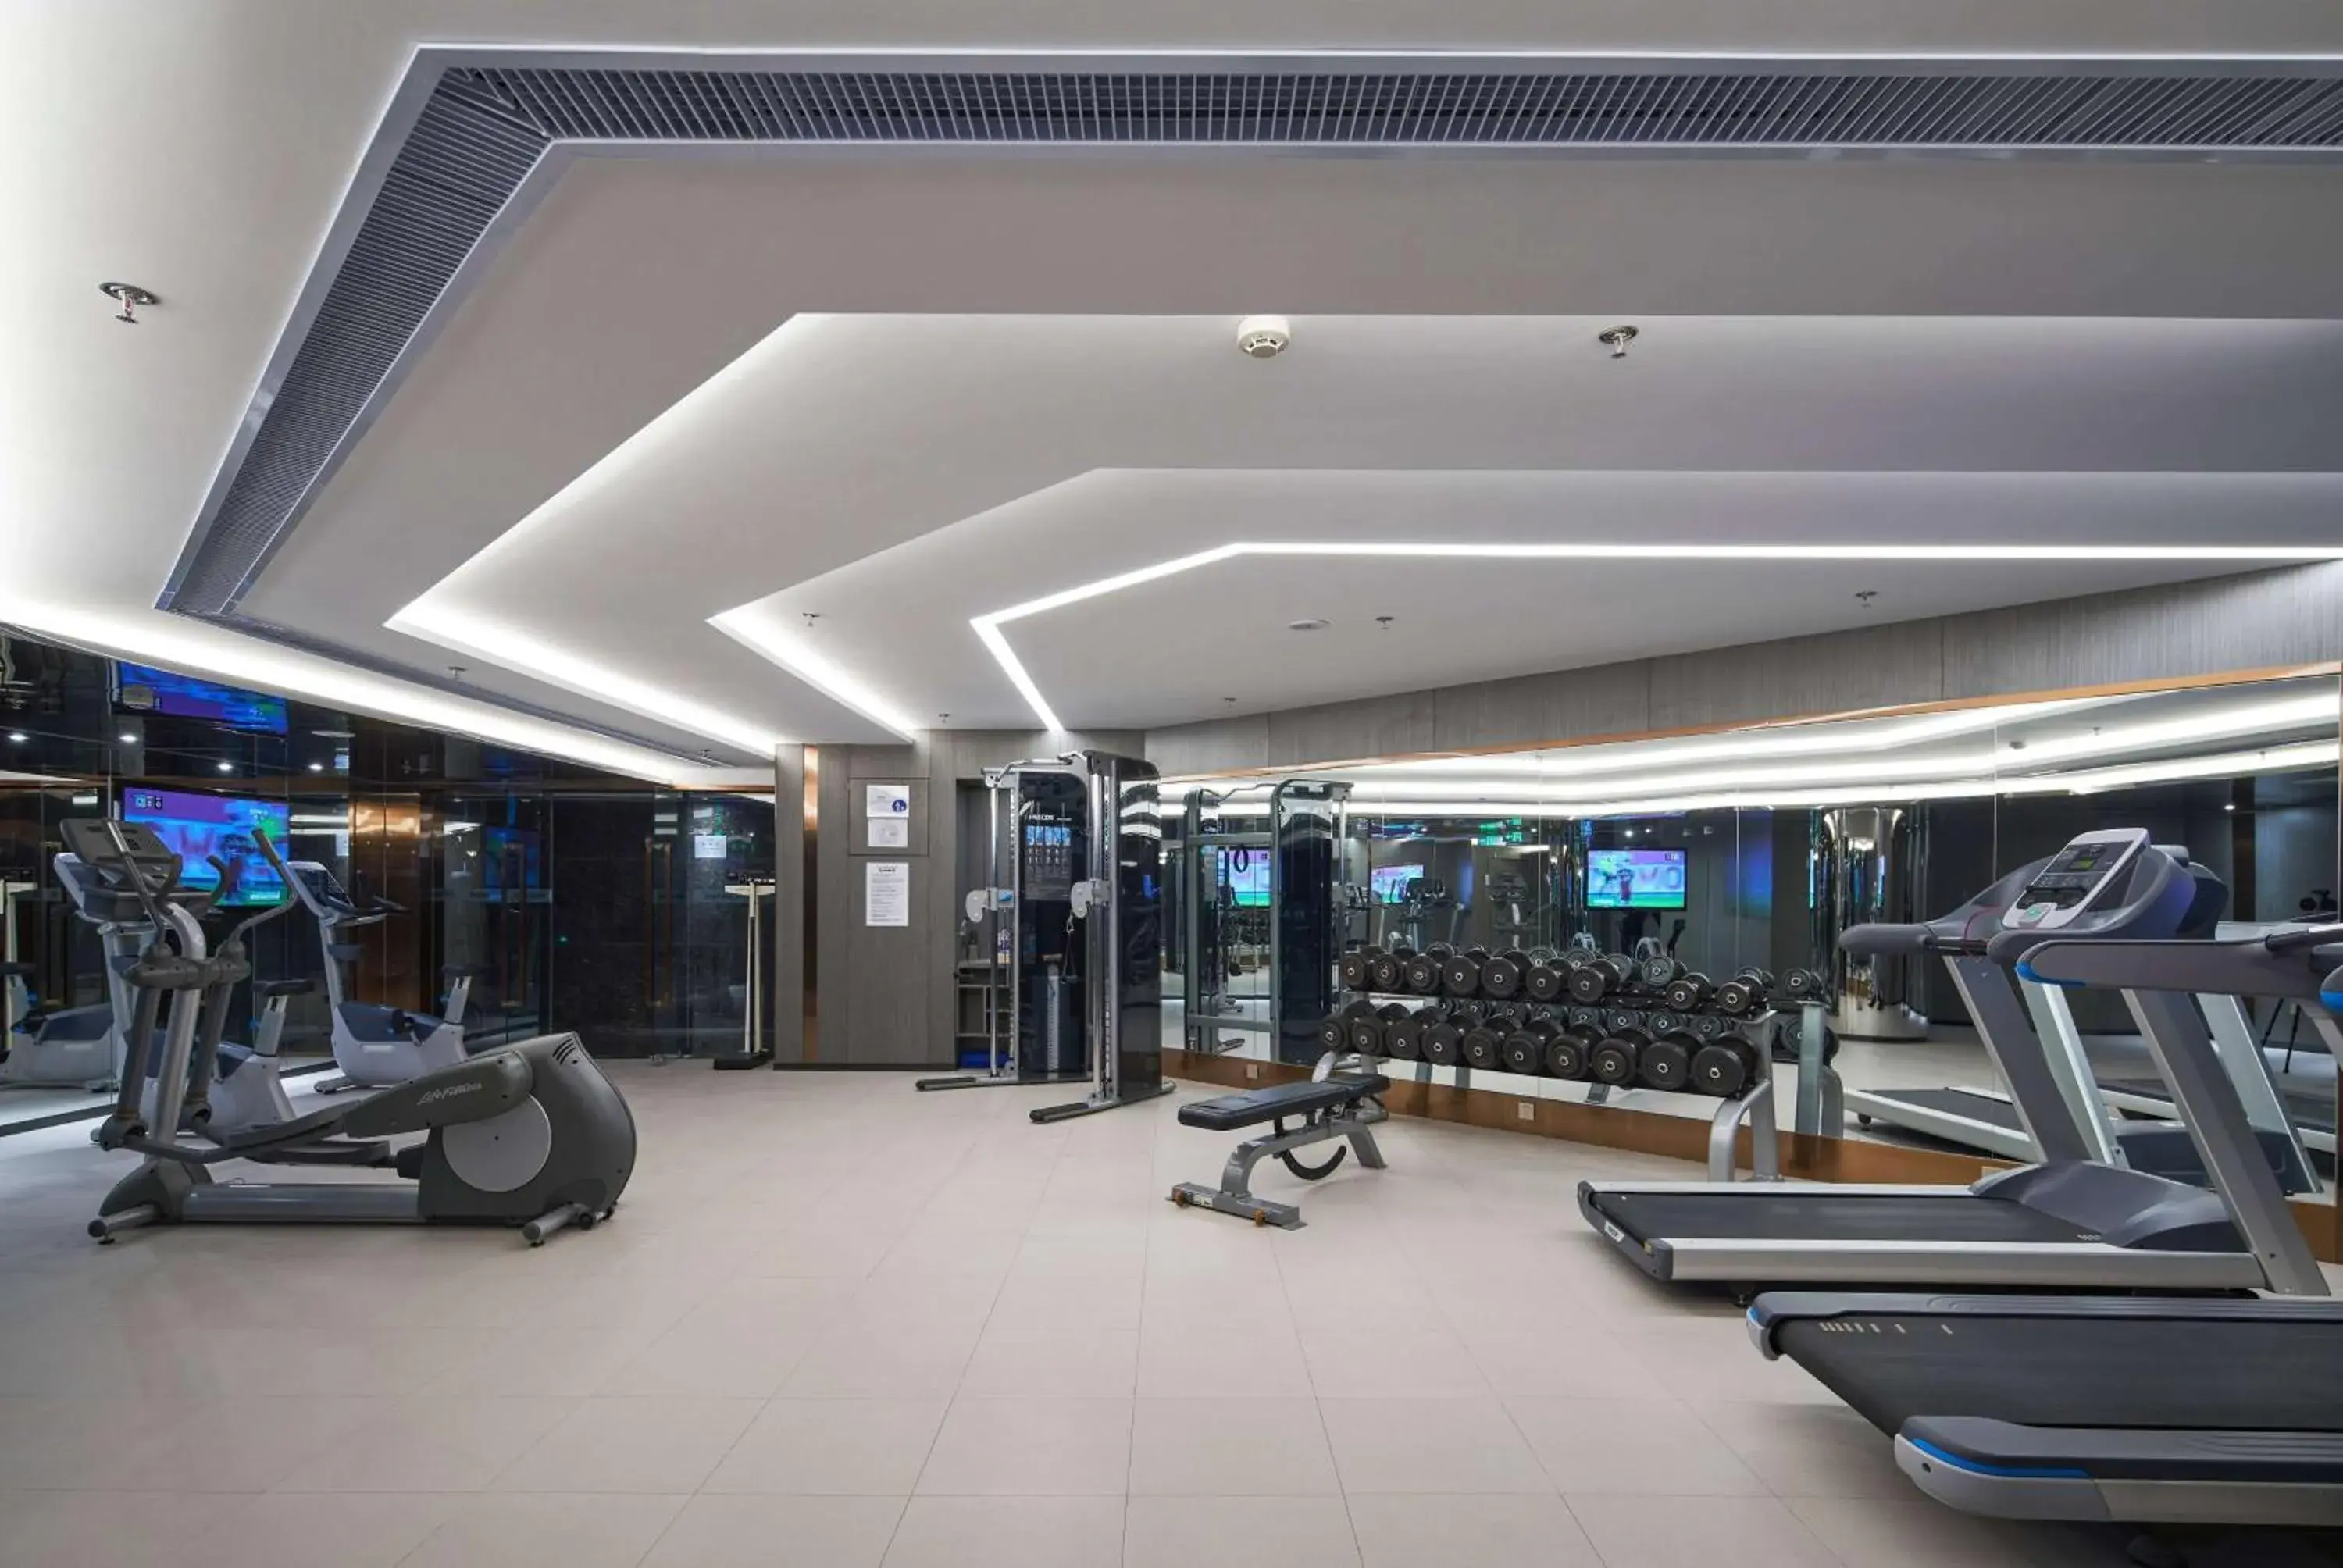 Fitness centre/facilities, Fitness Center/Facilities in Howard Johnson Paragon Hotel Beijing